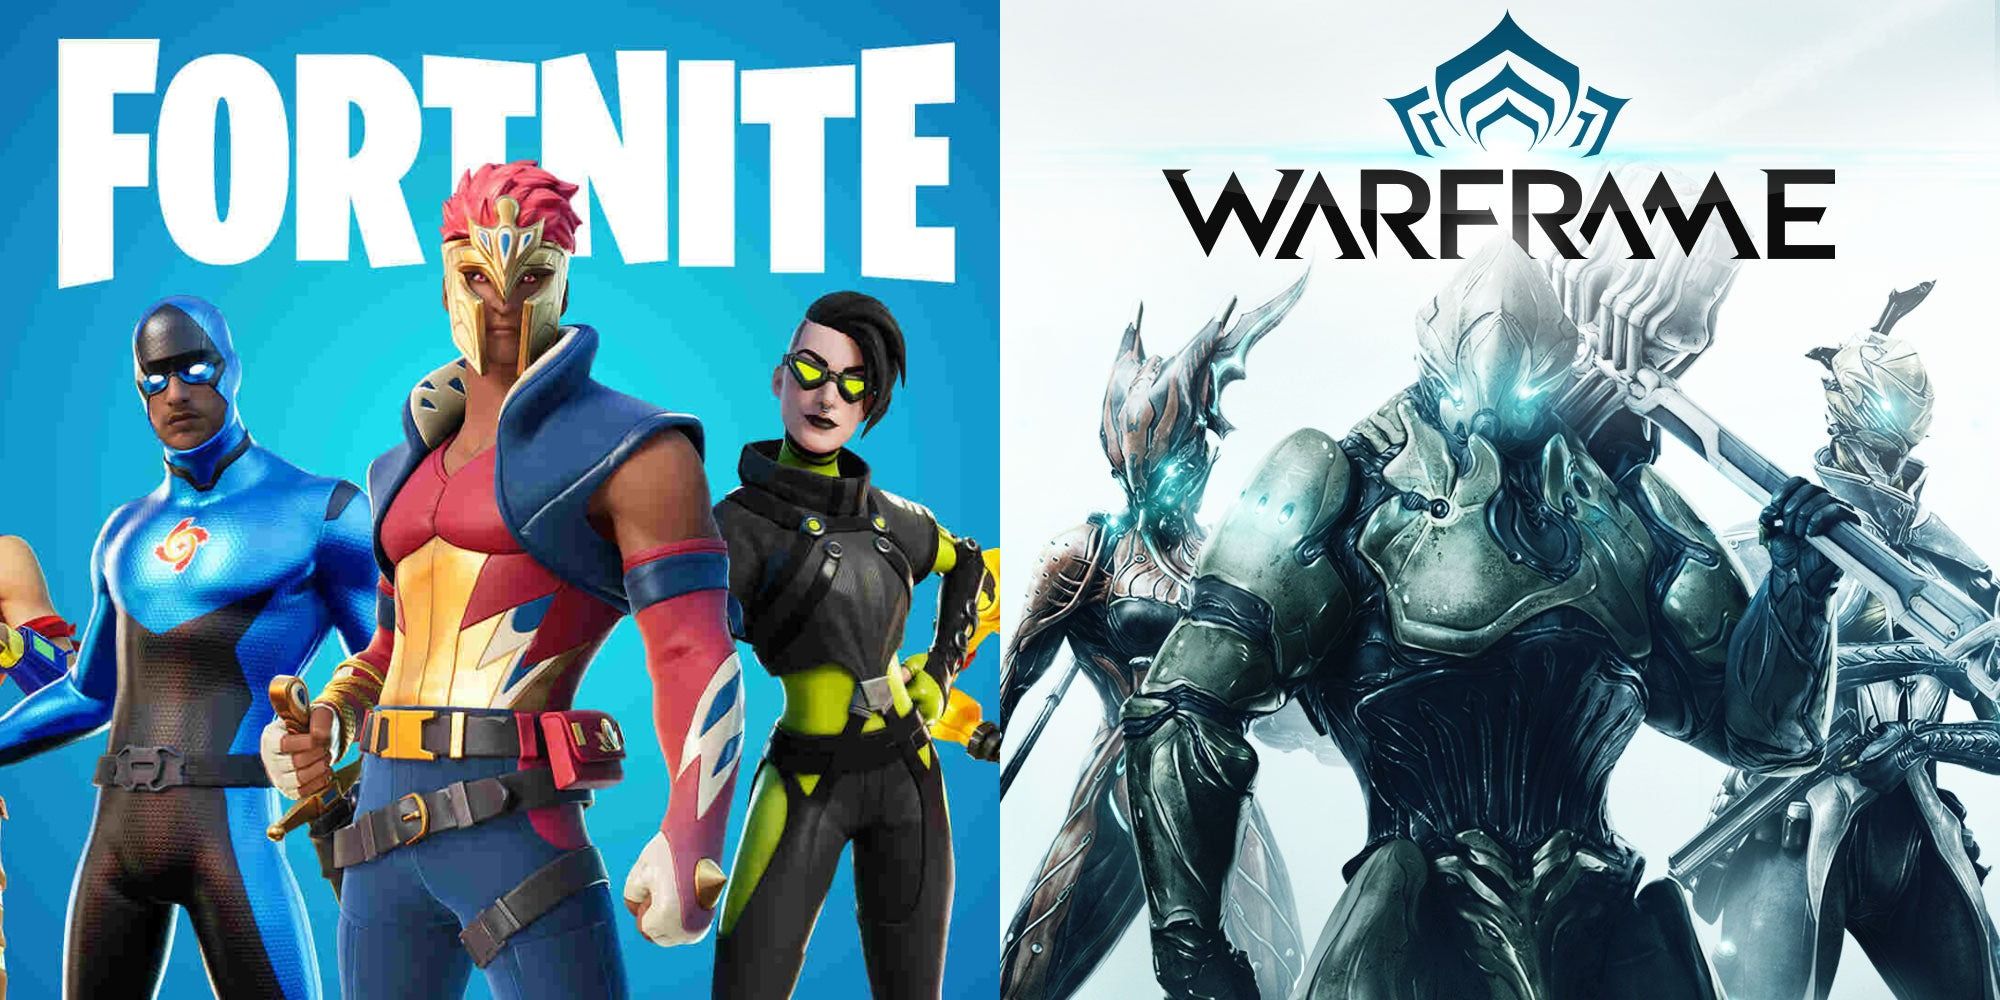 Split image showing artwork for the games Fortnite and Warframe.